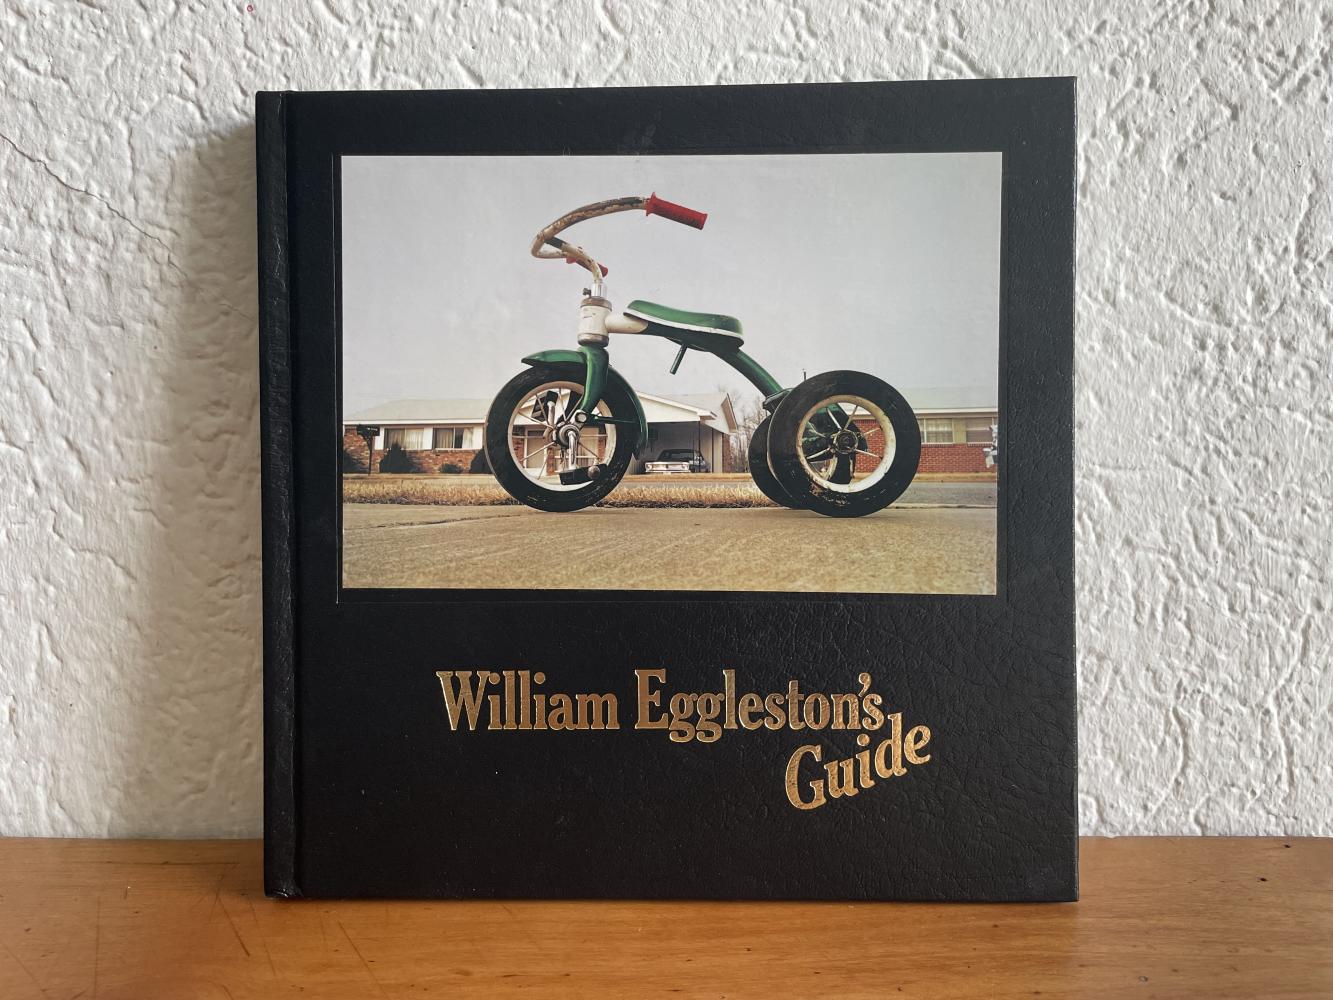 Zweite Auflage "William Eggleston's Guide", 2002, The Museum of Modern Art, New York